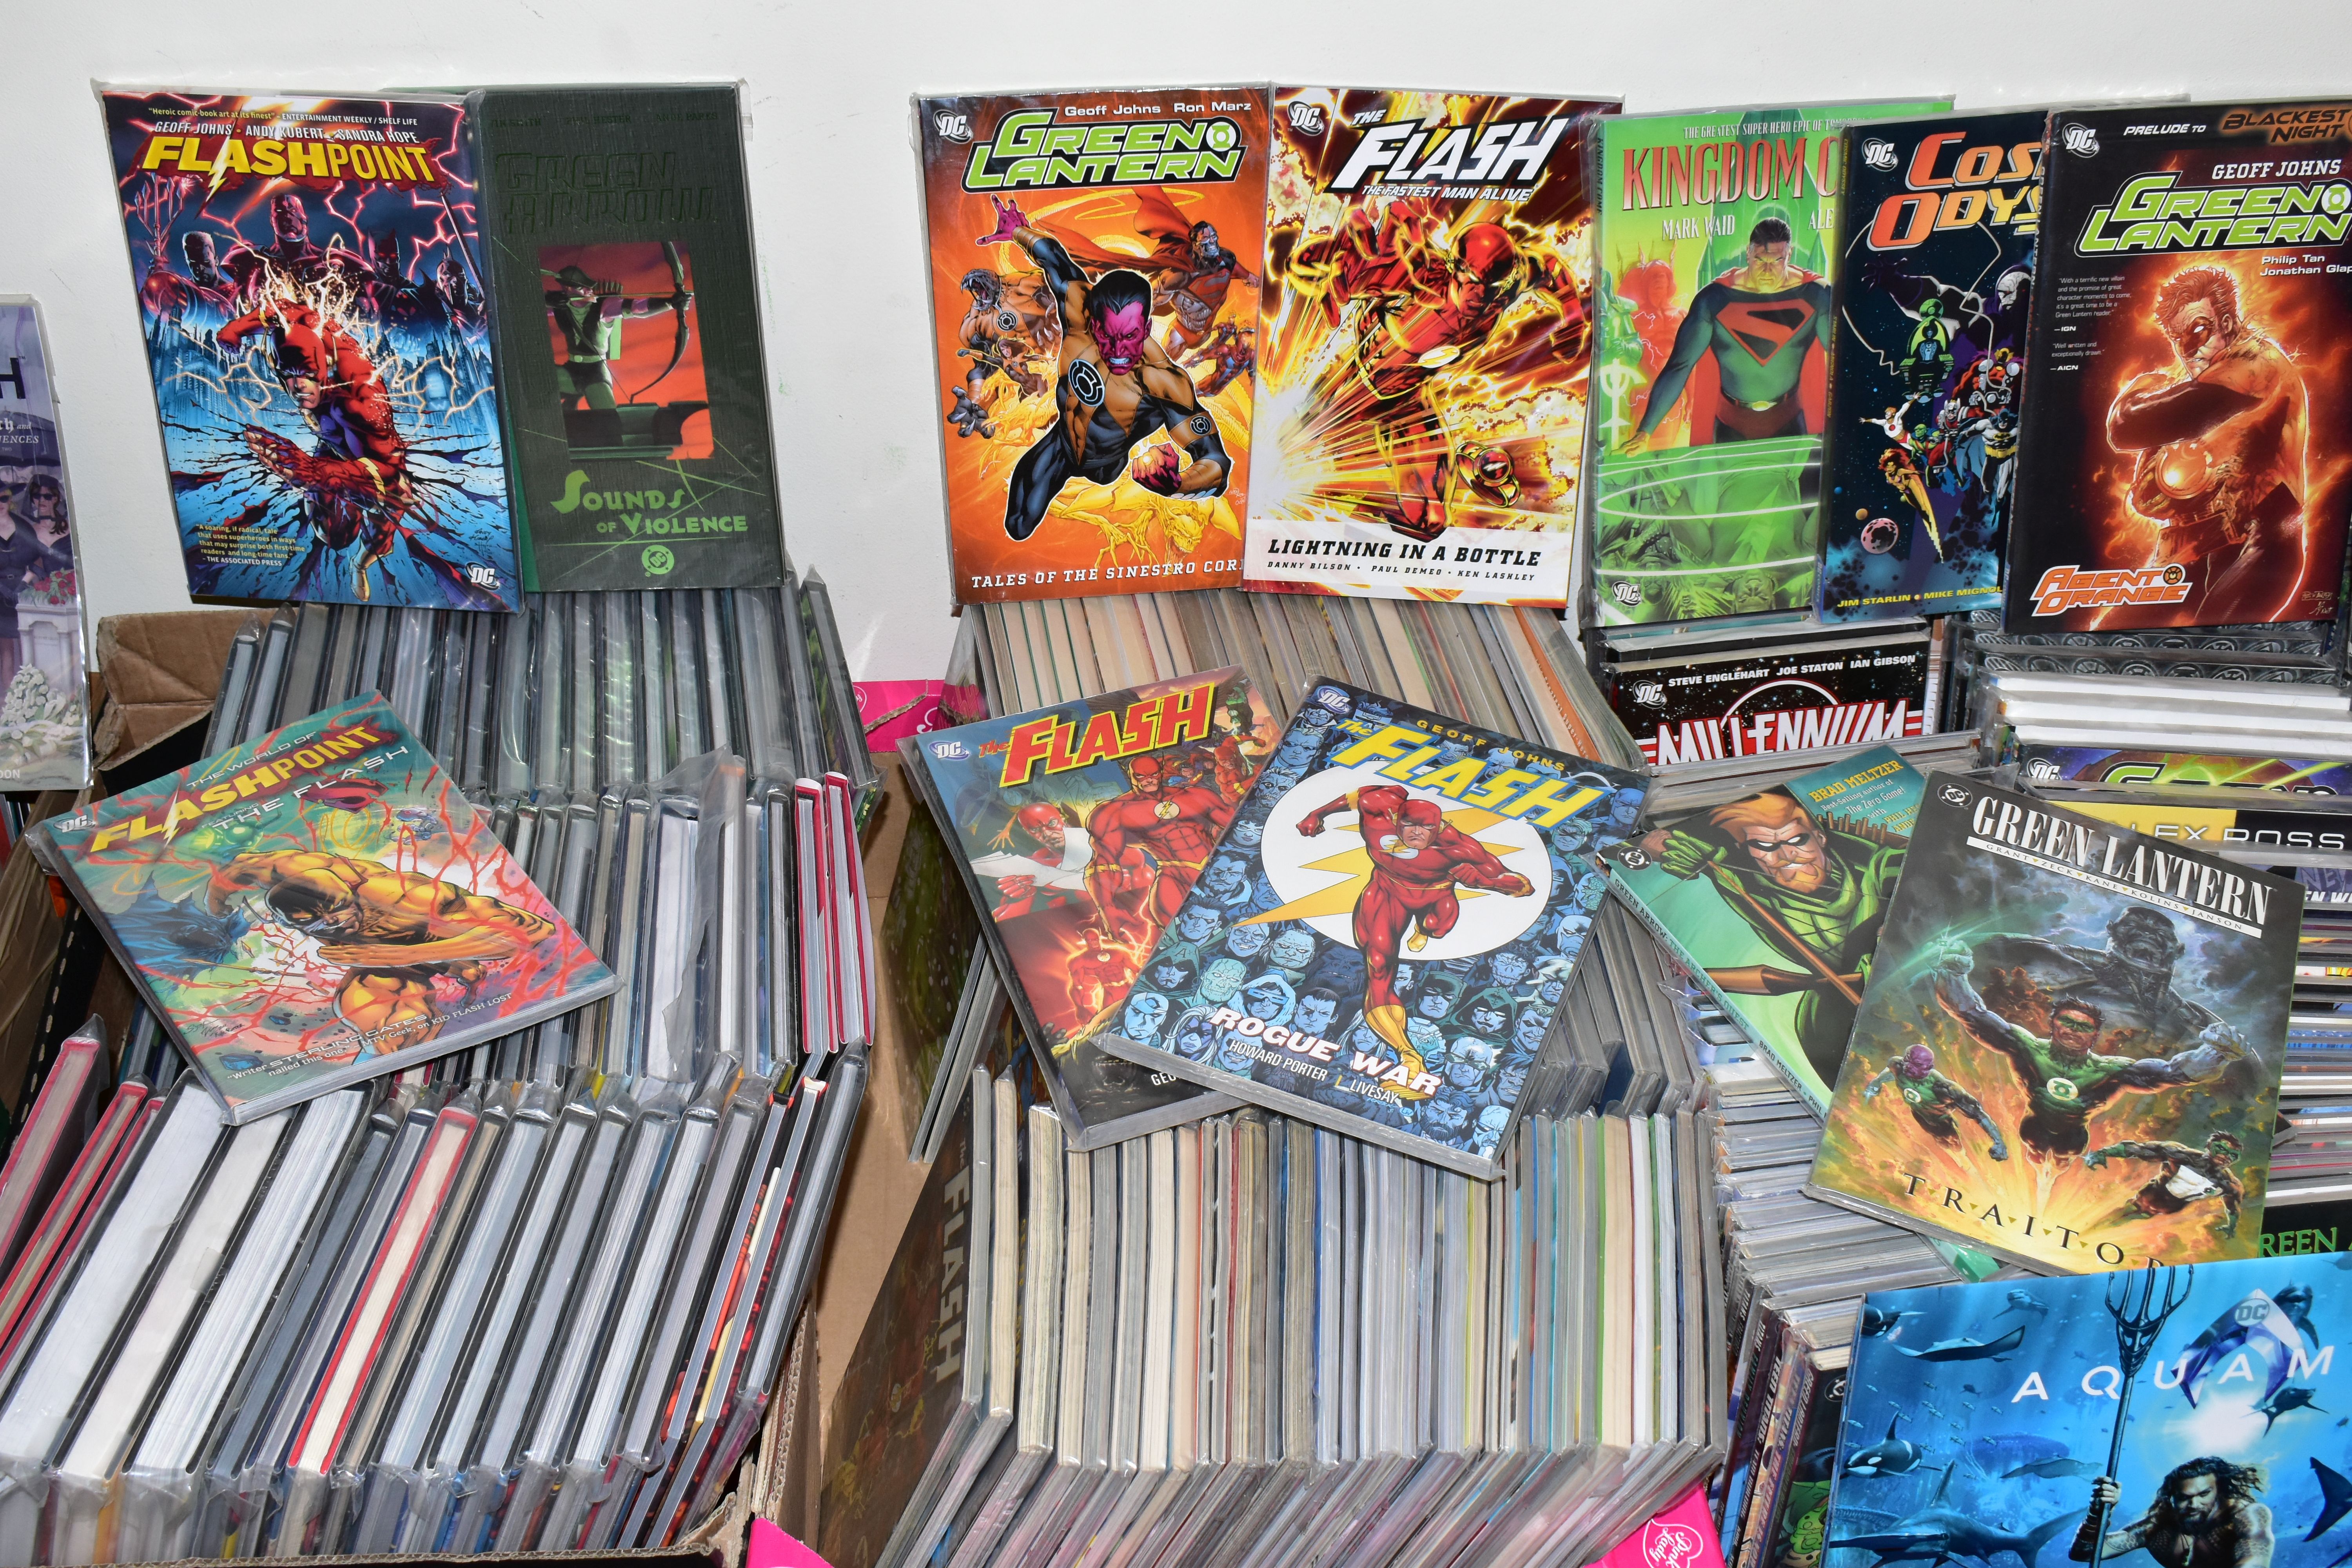 OVER 450 COMICS, Comics are mostly DC and include Batman, Superman, Flash, Green Lantern, Green